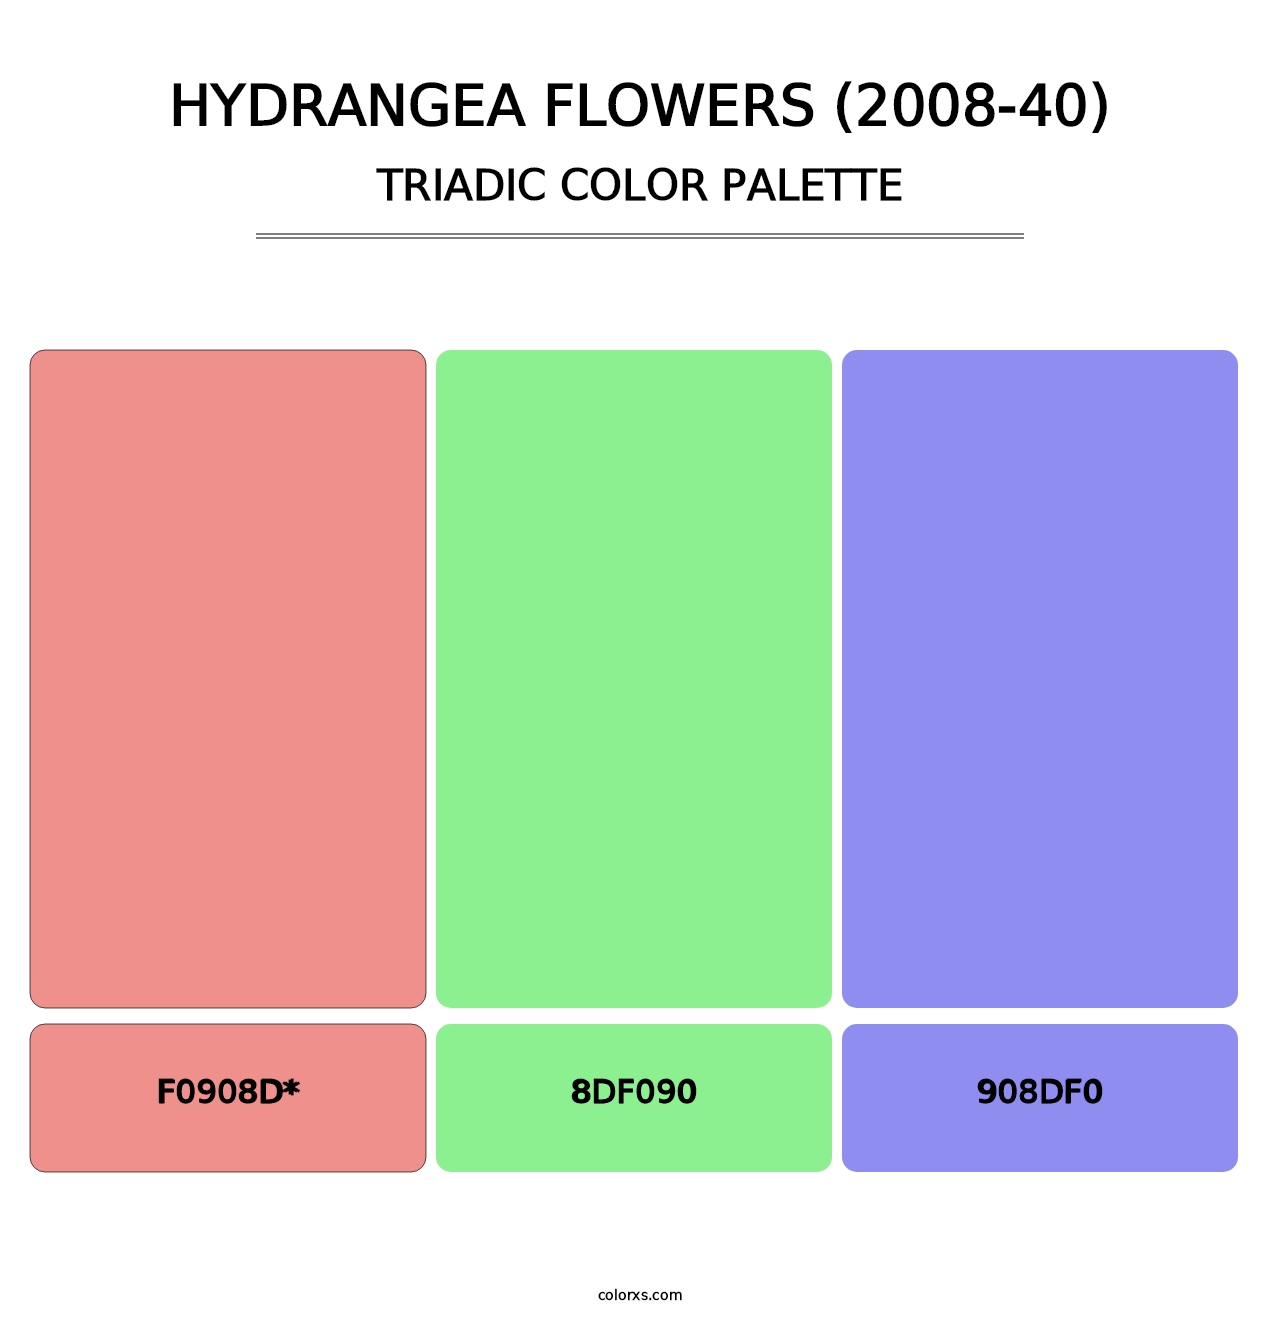 Hydrangea Flowers (2008-40) - Triadic Color Palette